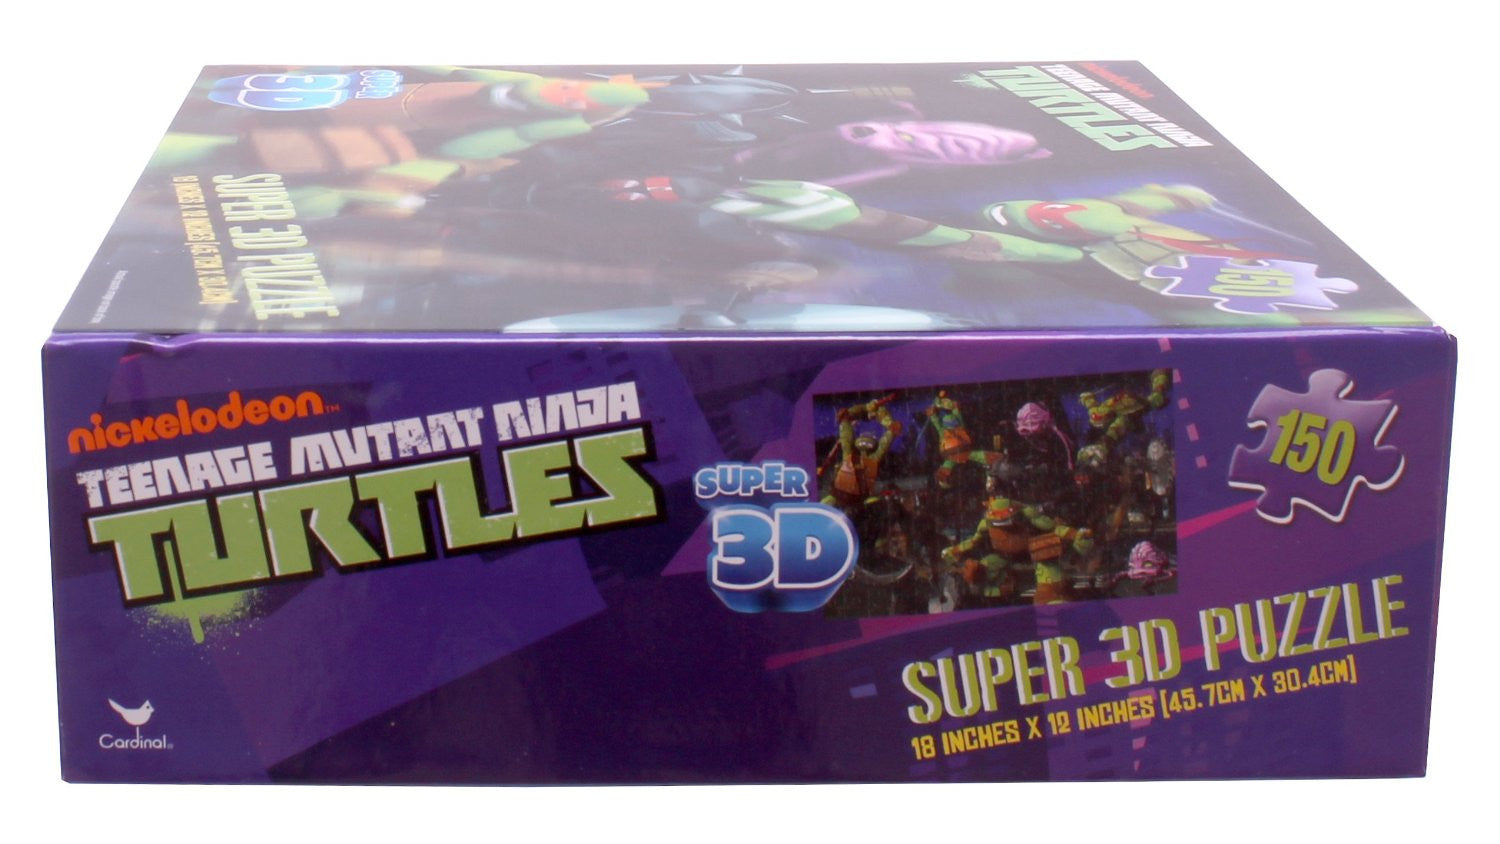 Nickelodeon Teenage Mutant Ninja Turtles Super 3d Puzzle 150 Pieces